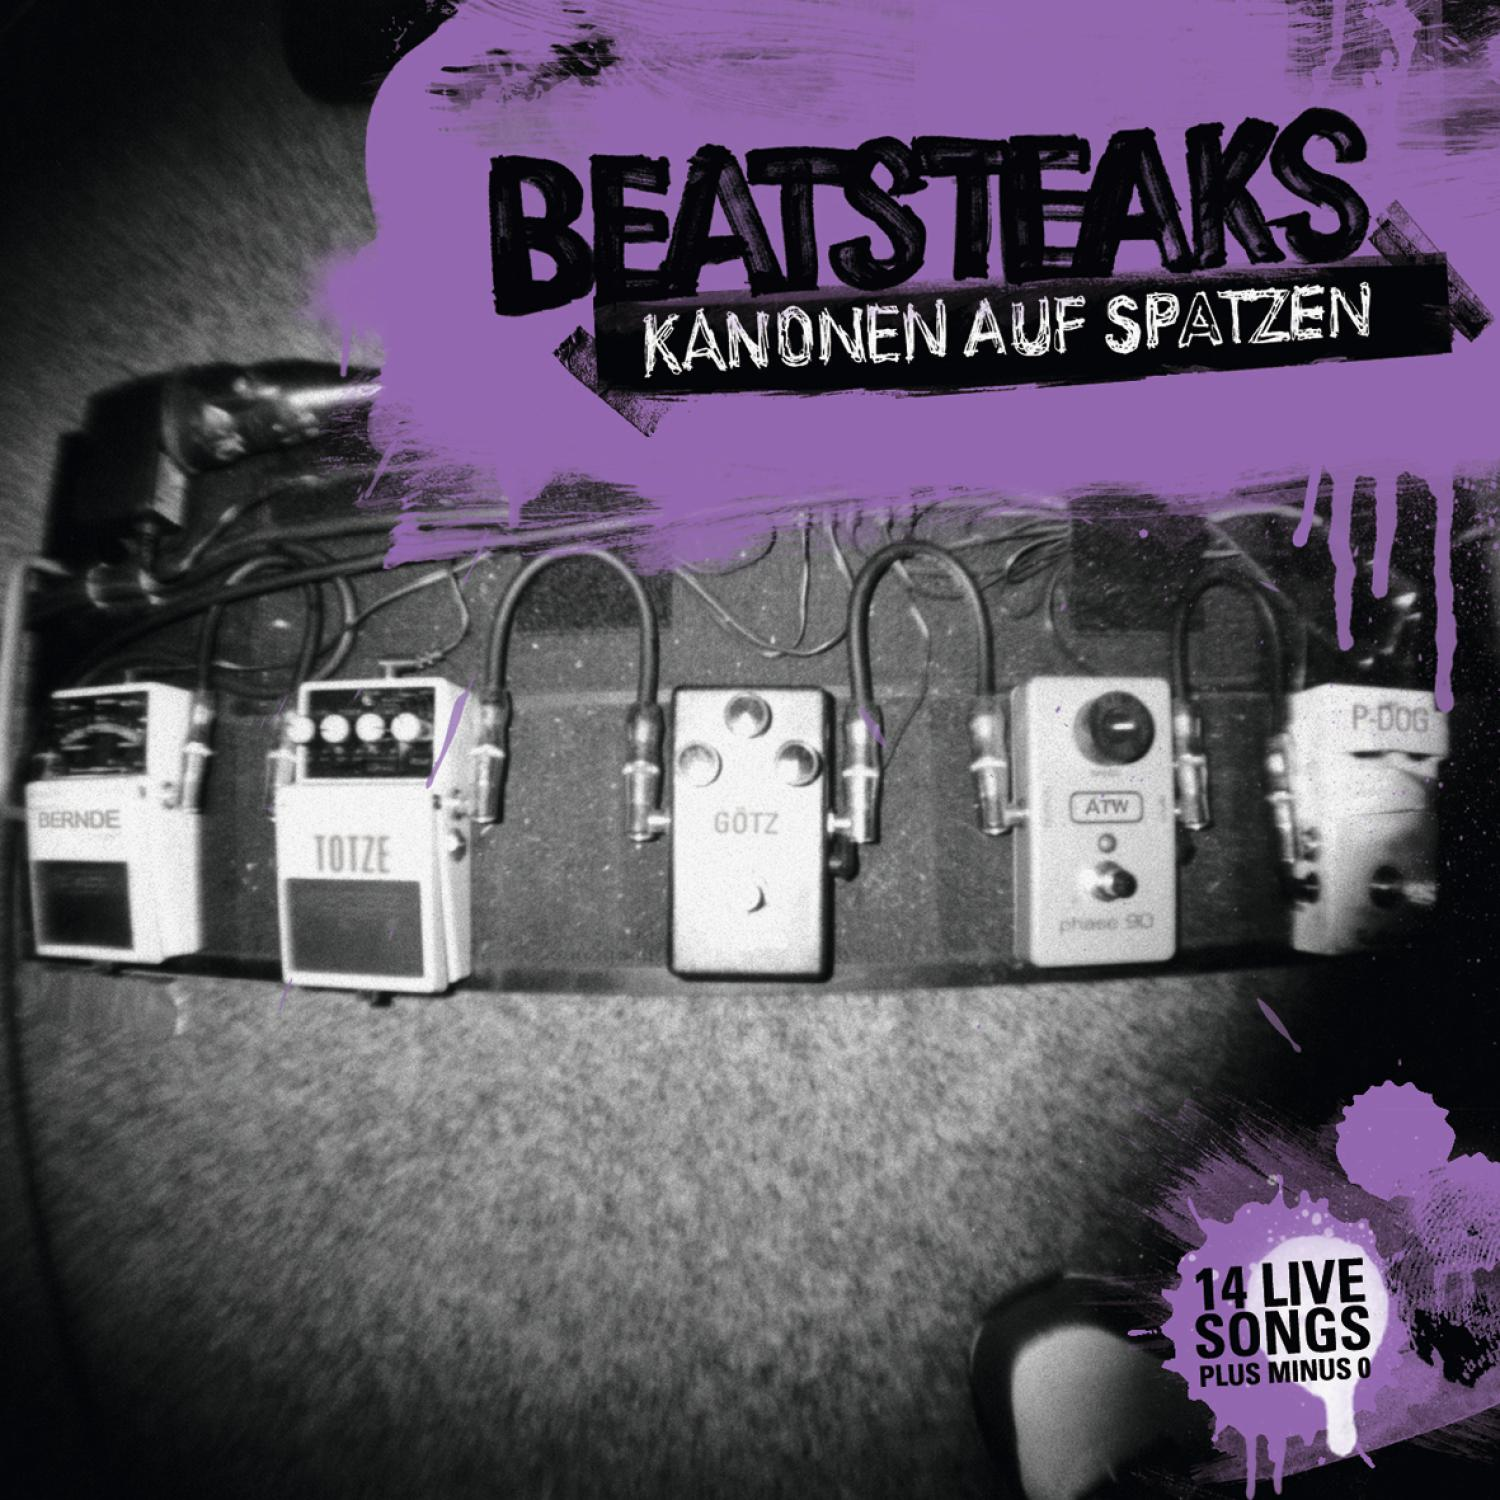 Beatsteaks SONGS - - LIVE KANONEN 14L - (CD) SPATZEN AUF